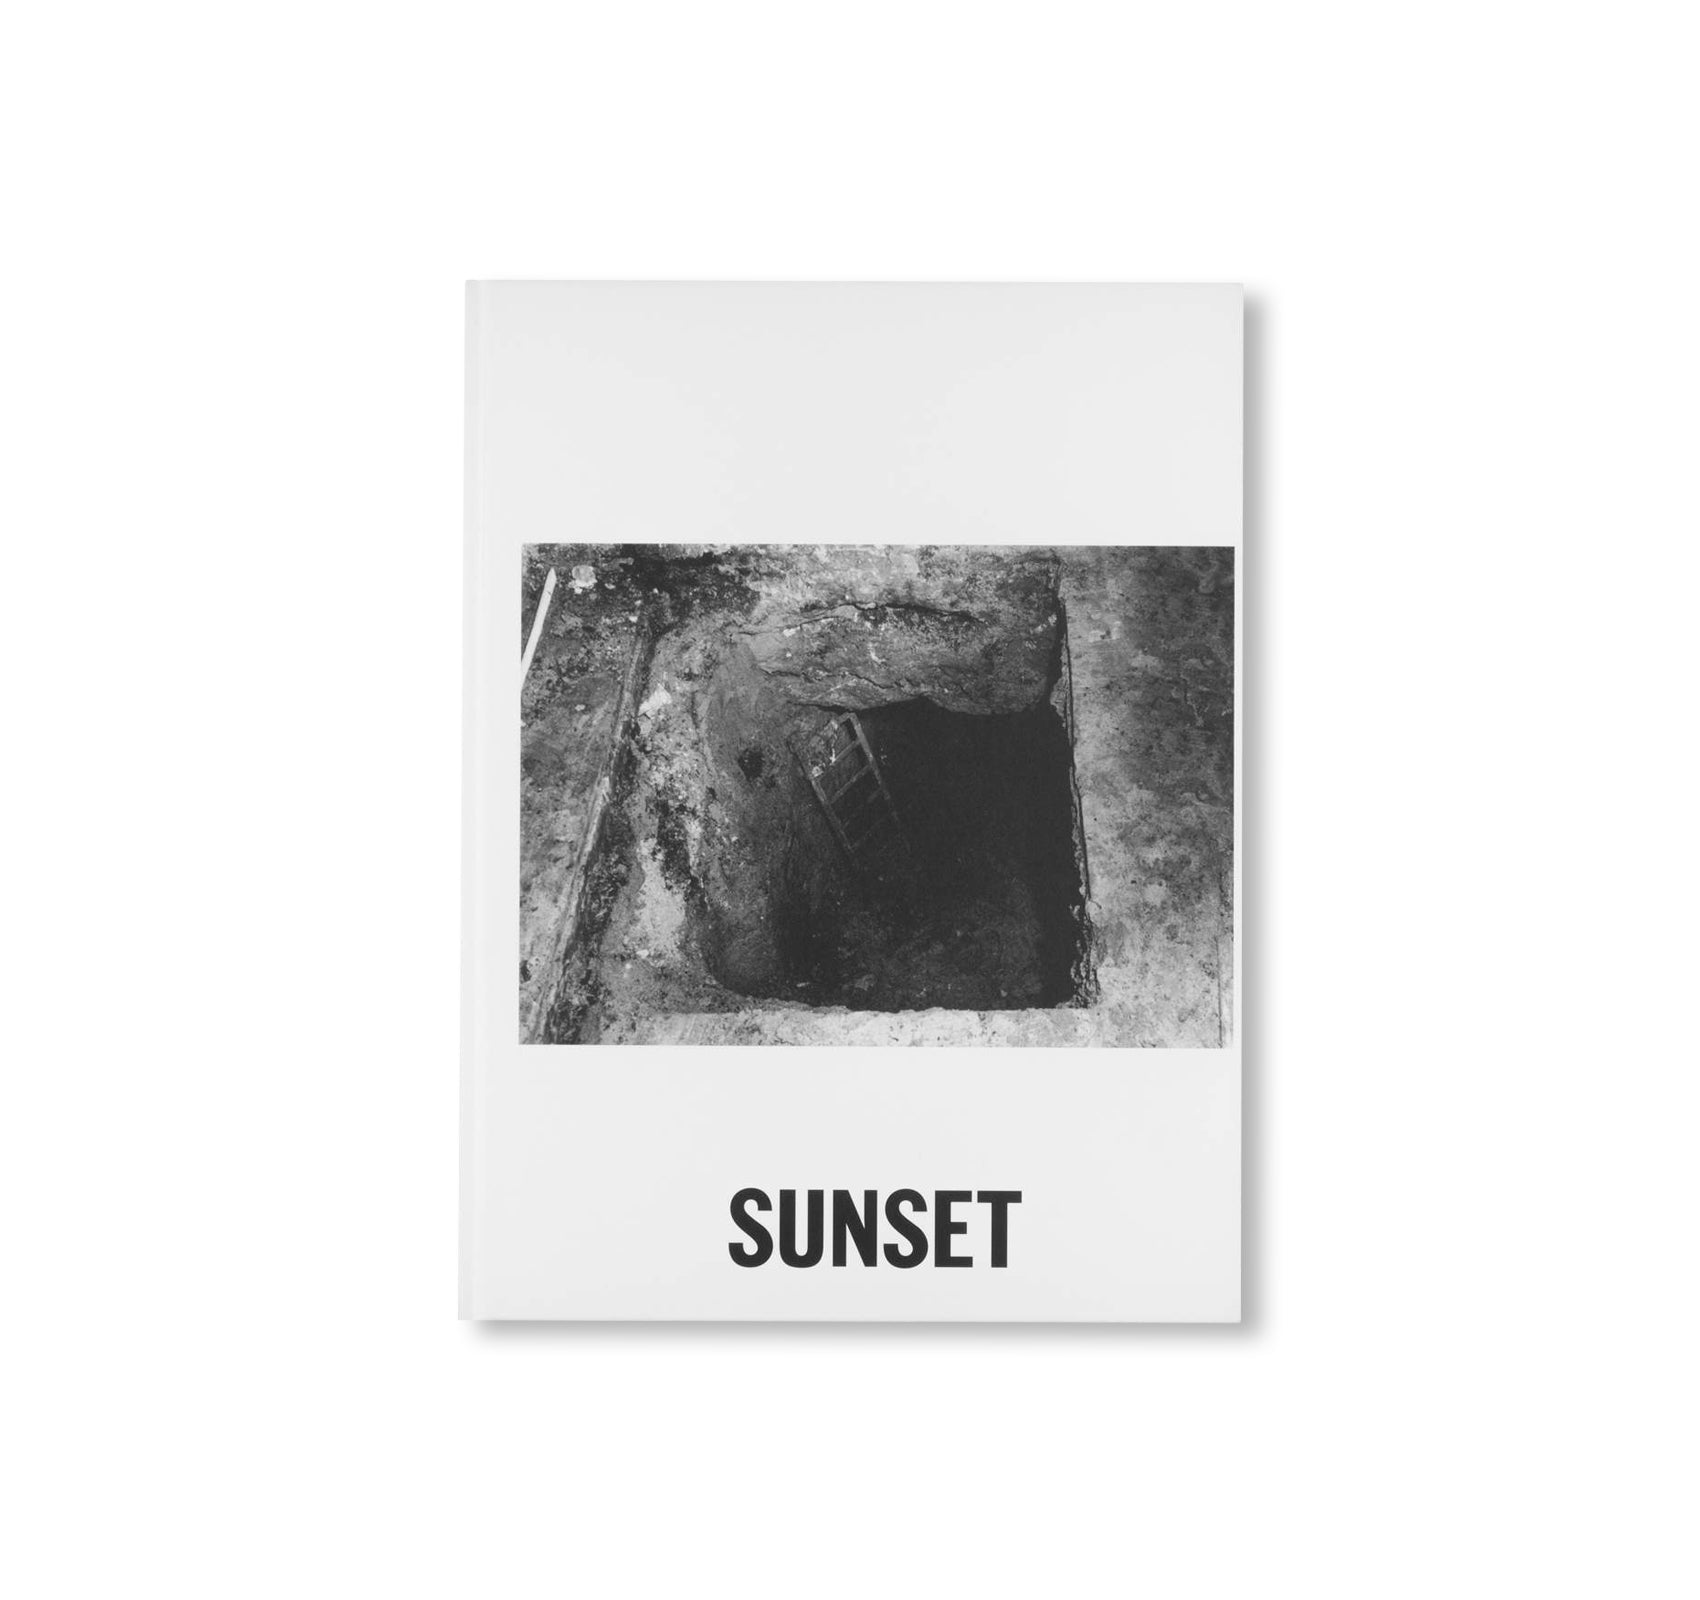 SUNSET by Jens Klein